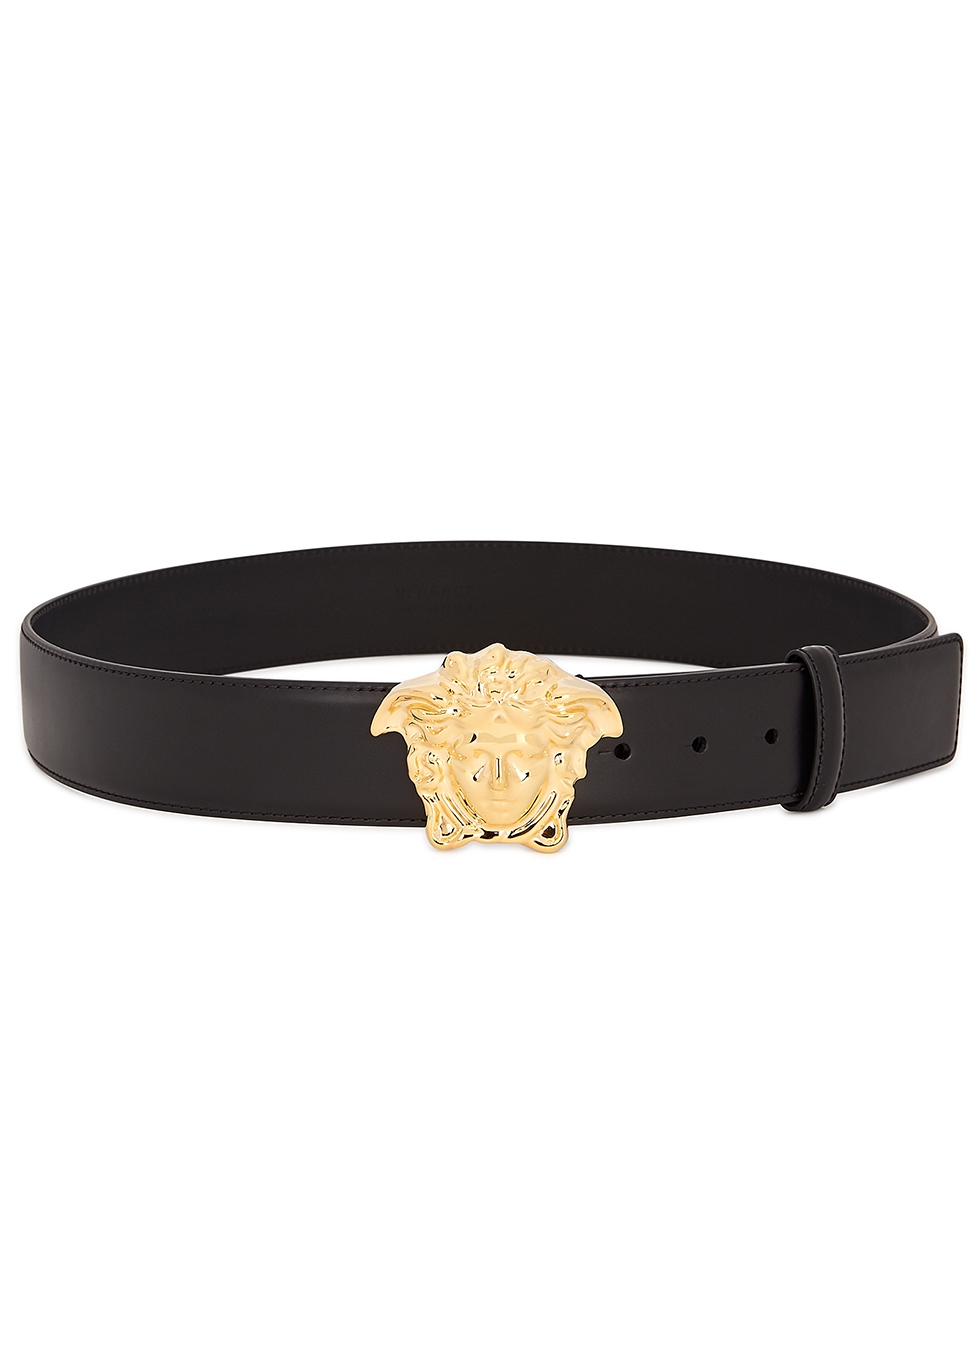 versace belt with diamonds